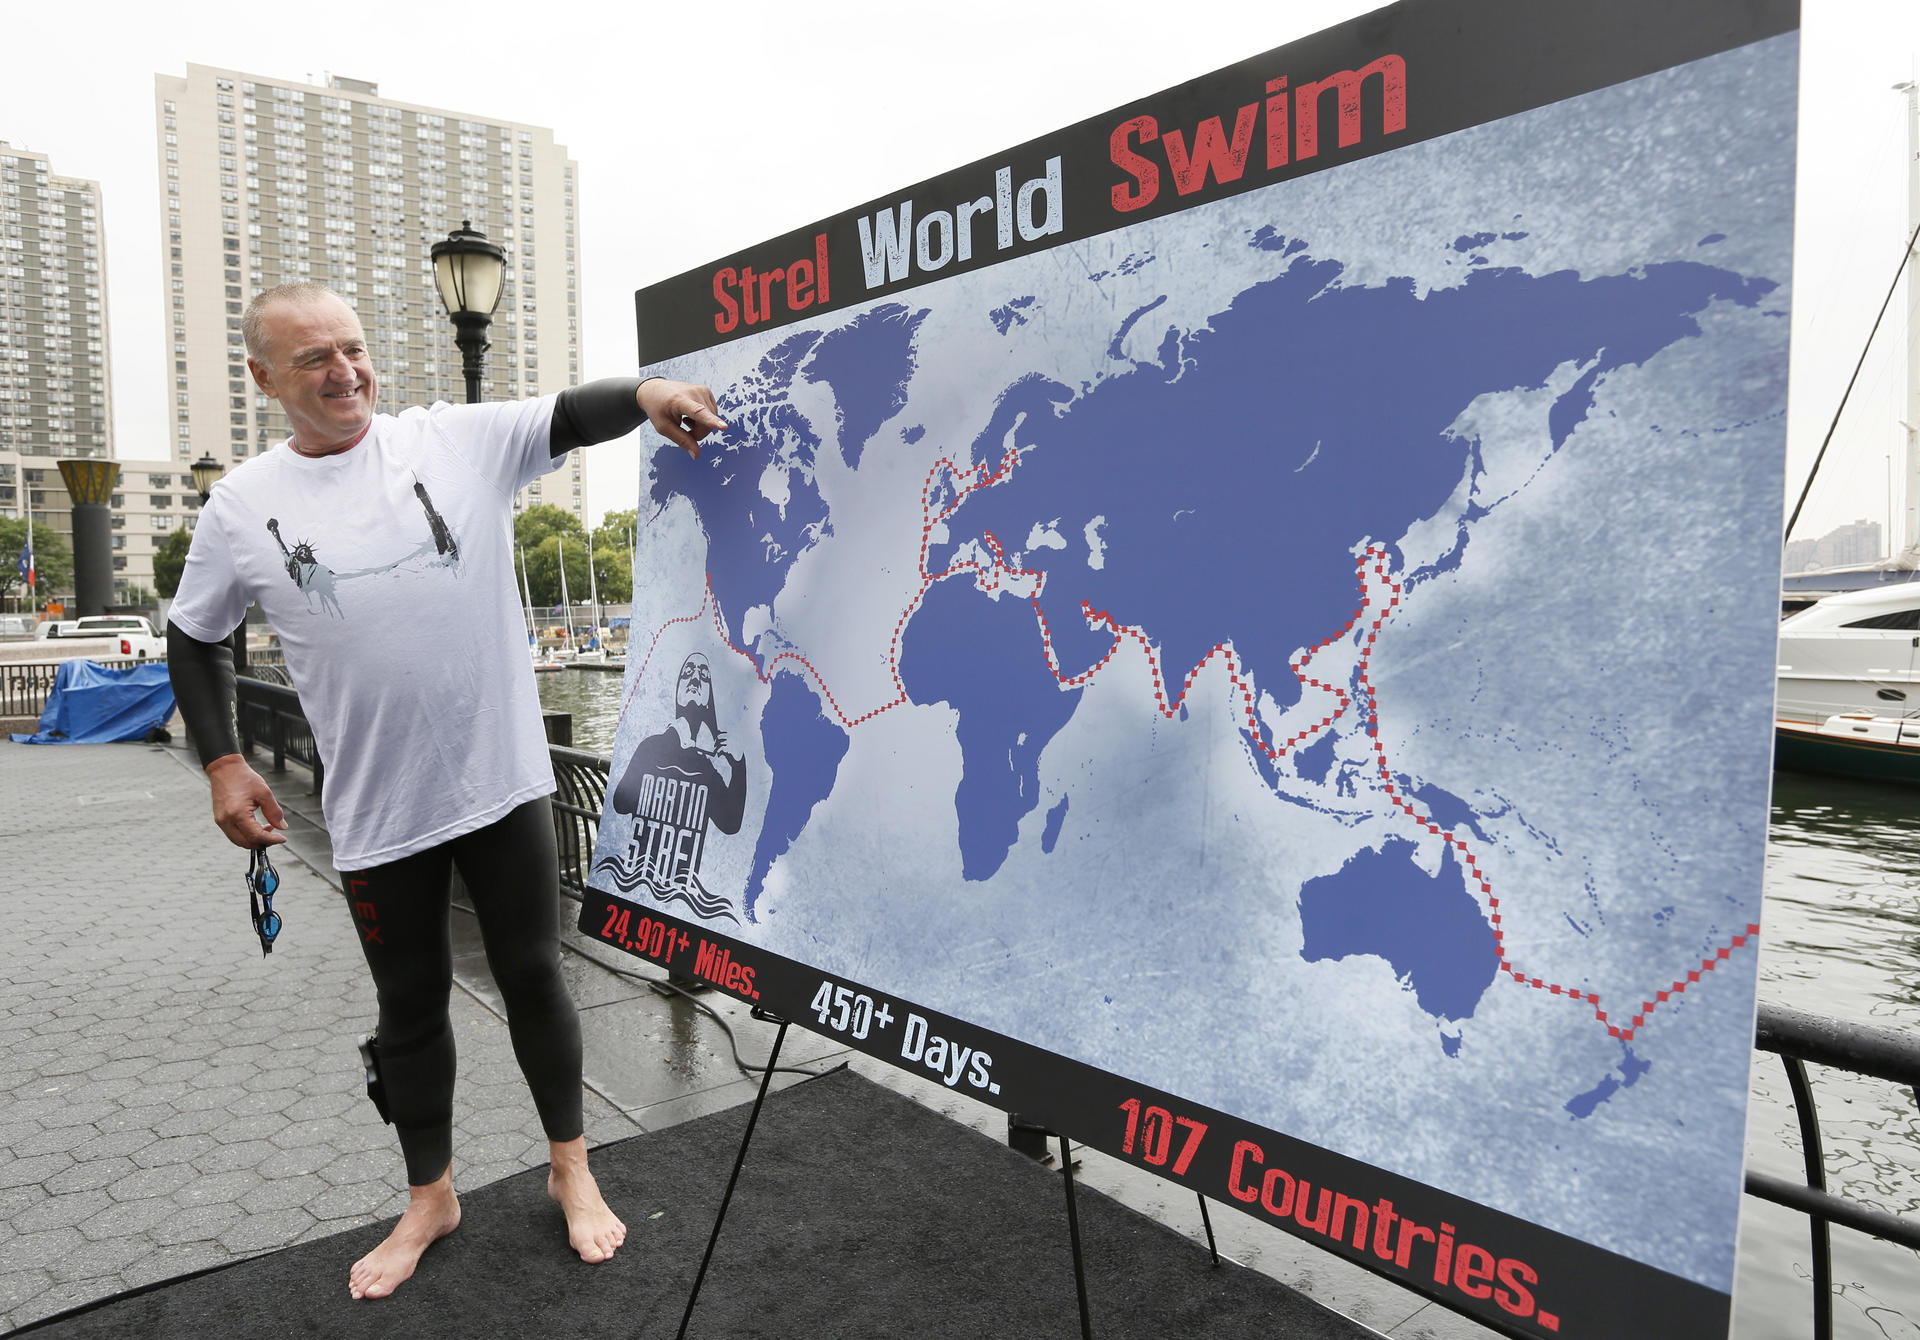 Martin Strel's marathon will take him across 107 countries.